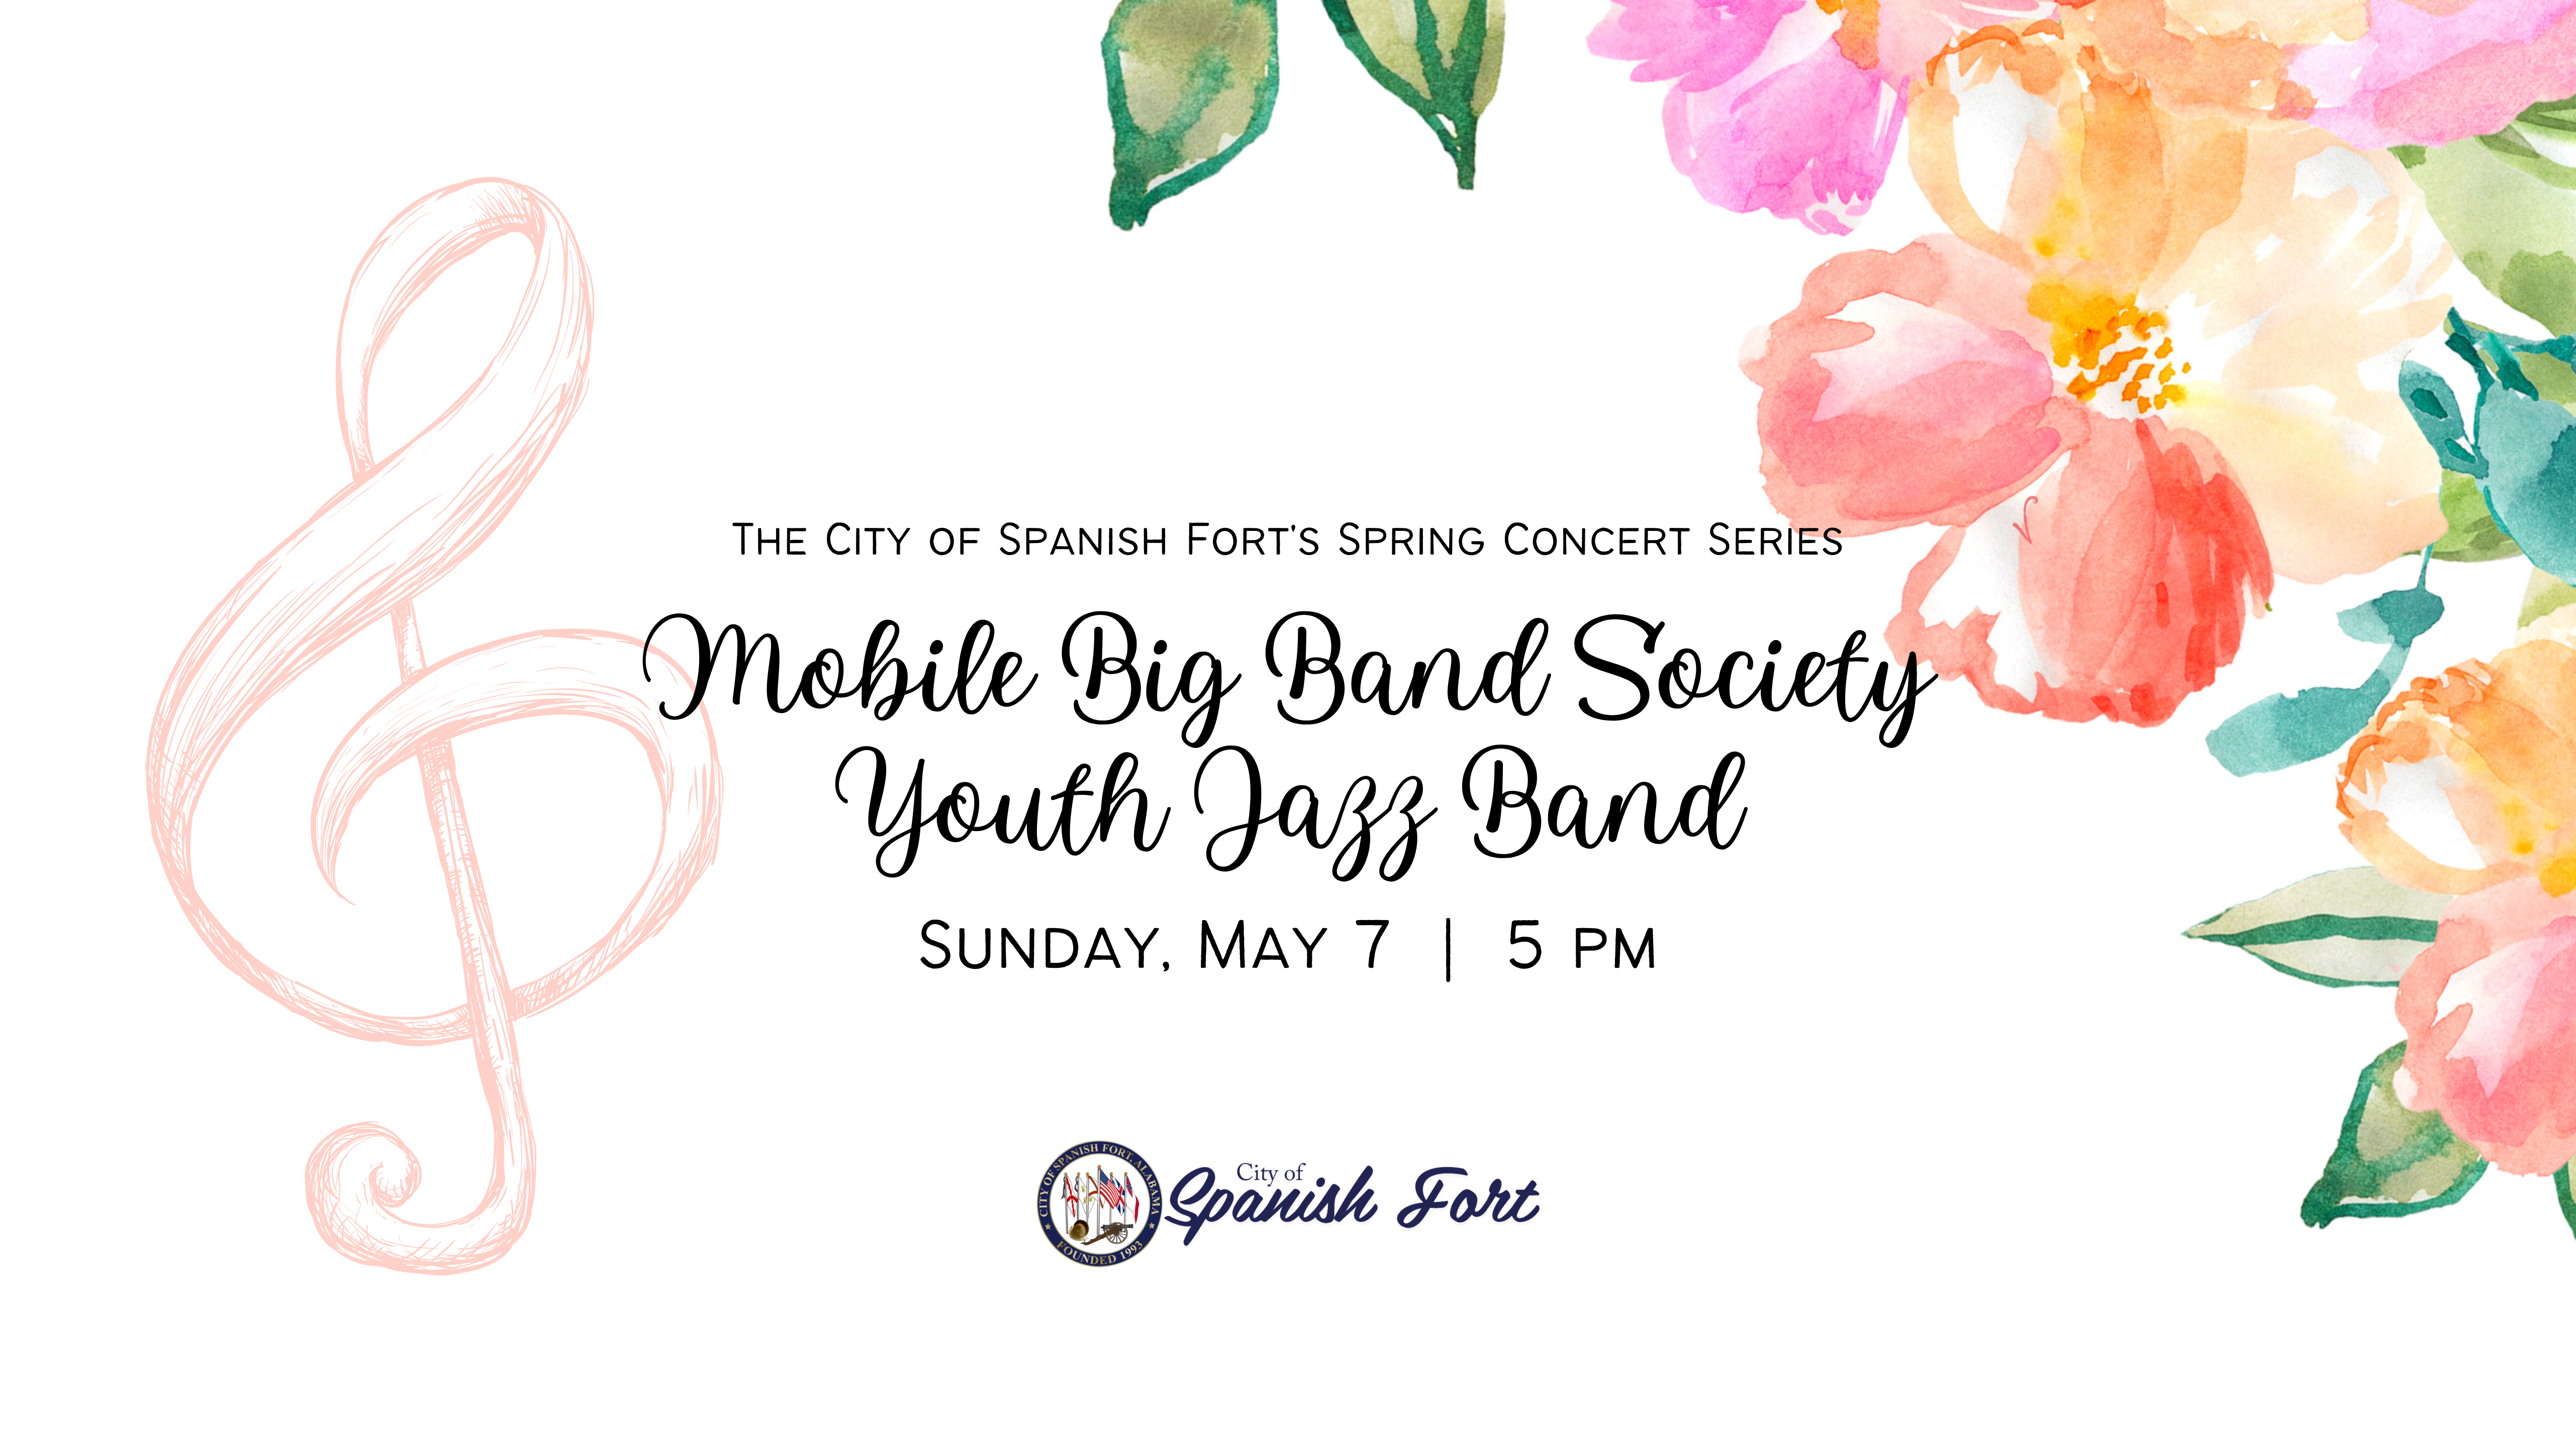 Mobile Big Band Society Youth Jazz Band Concert